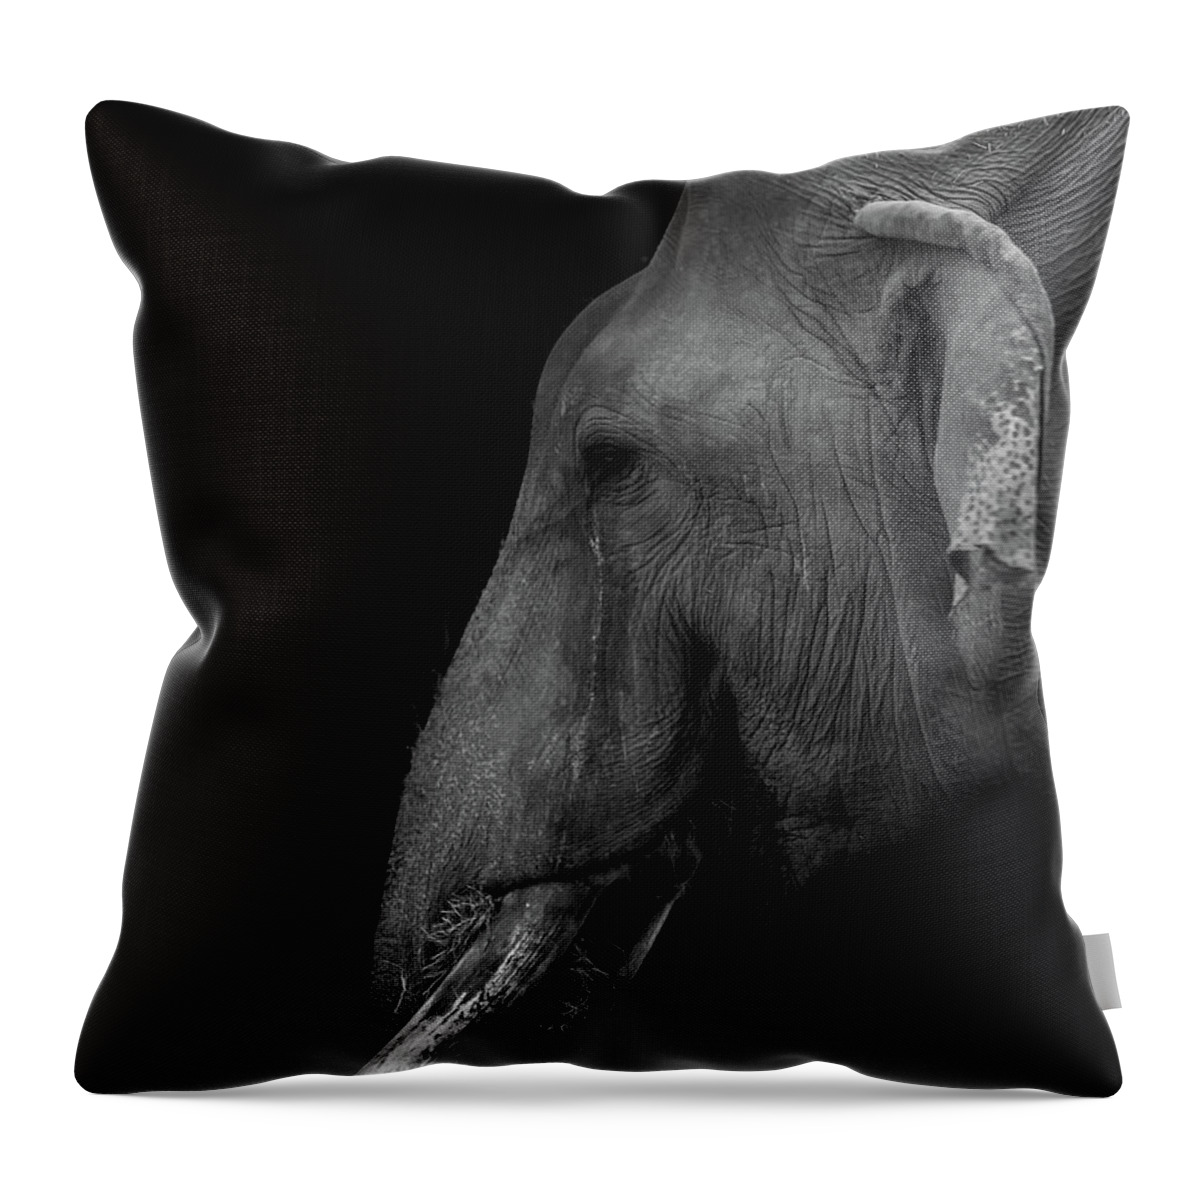 Elepant Throw Pillow featuring the photograph Asian Elephant by Jaime Mercado